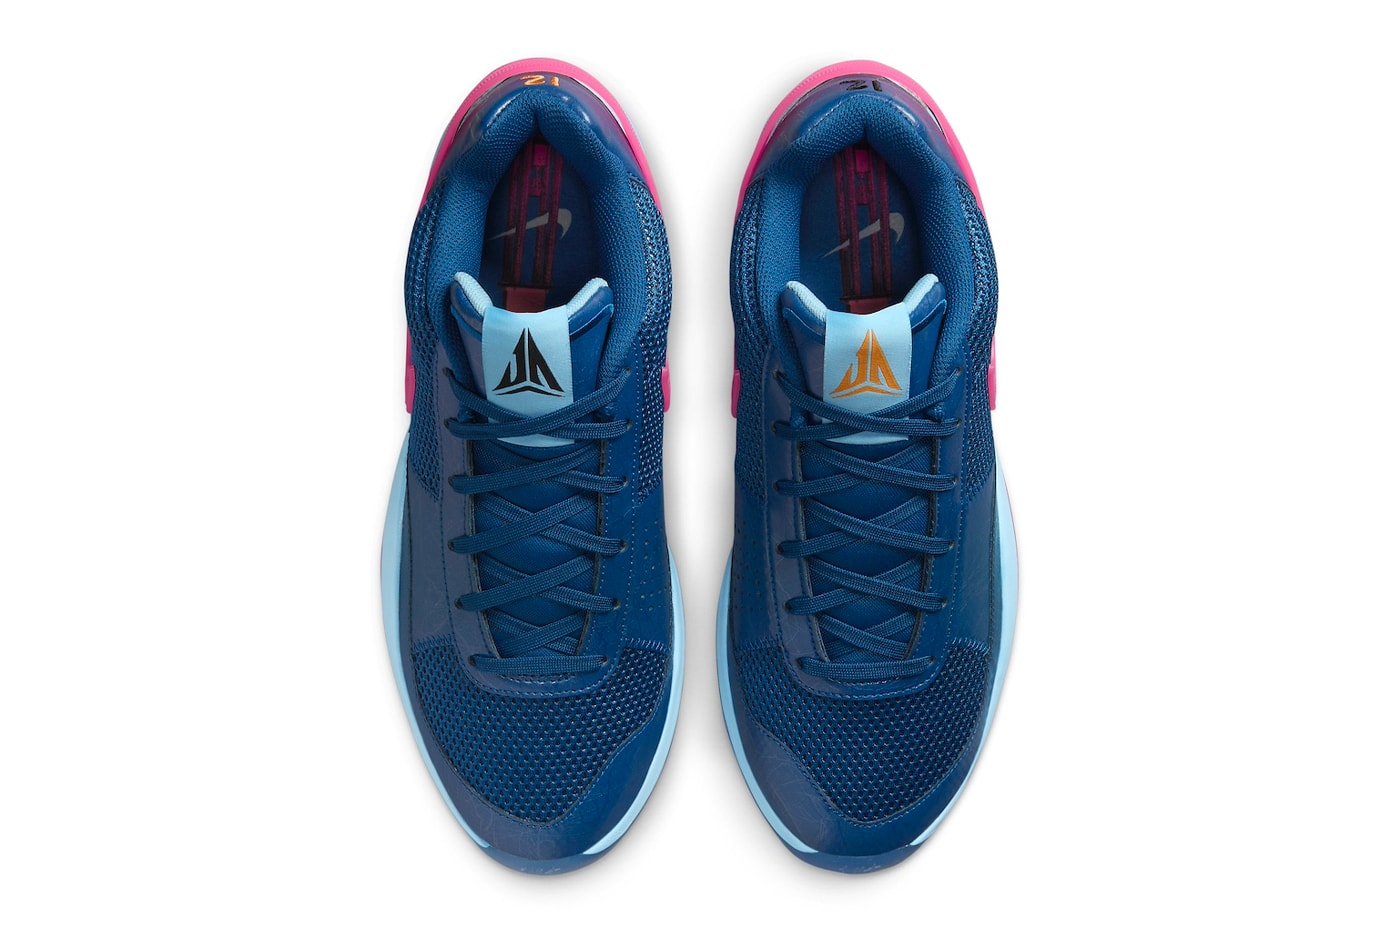 Nike Ja 1 "NY vs NY" Has an Early Summer Release Date FV1286-400 Court Blue/Hyper Pink-Aquarius Blue-Black-Bright Mandarin basketball swoosh ja morant shoes 